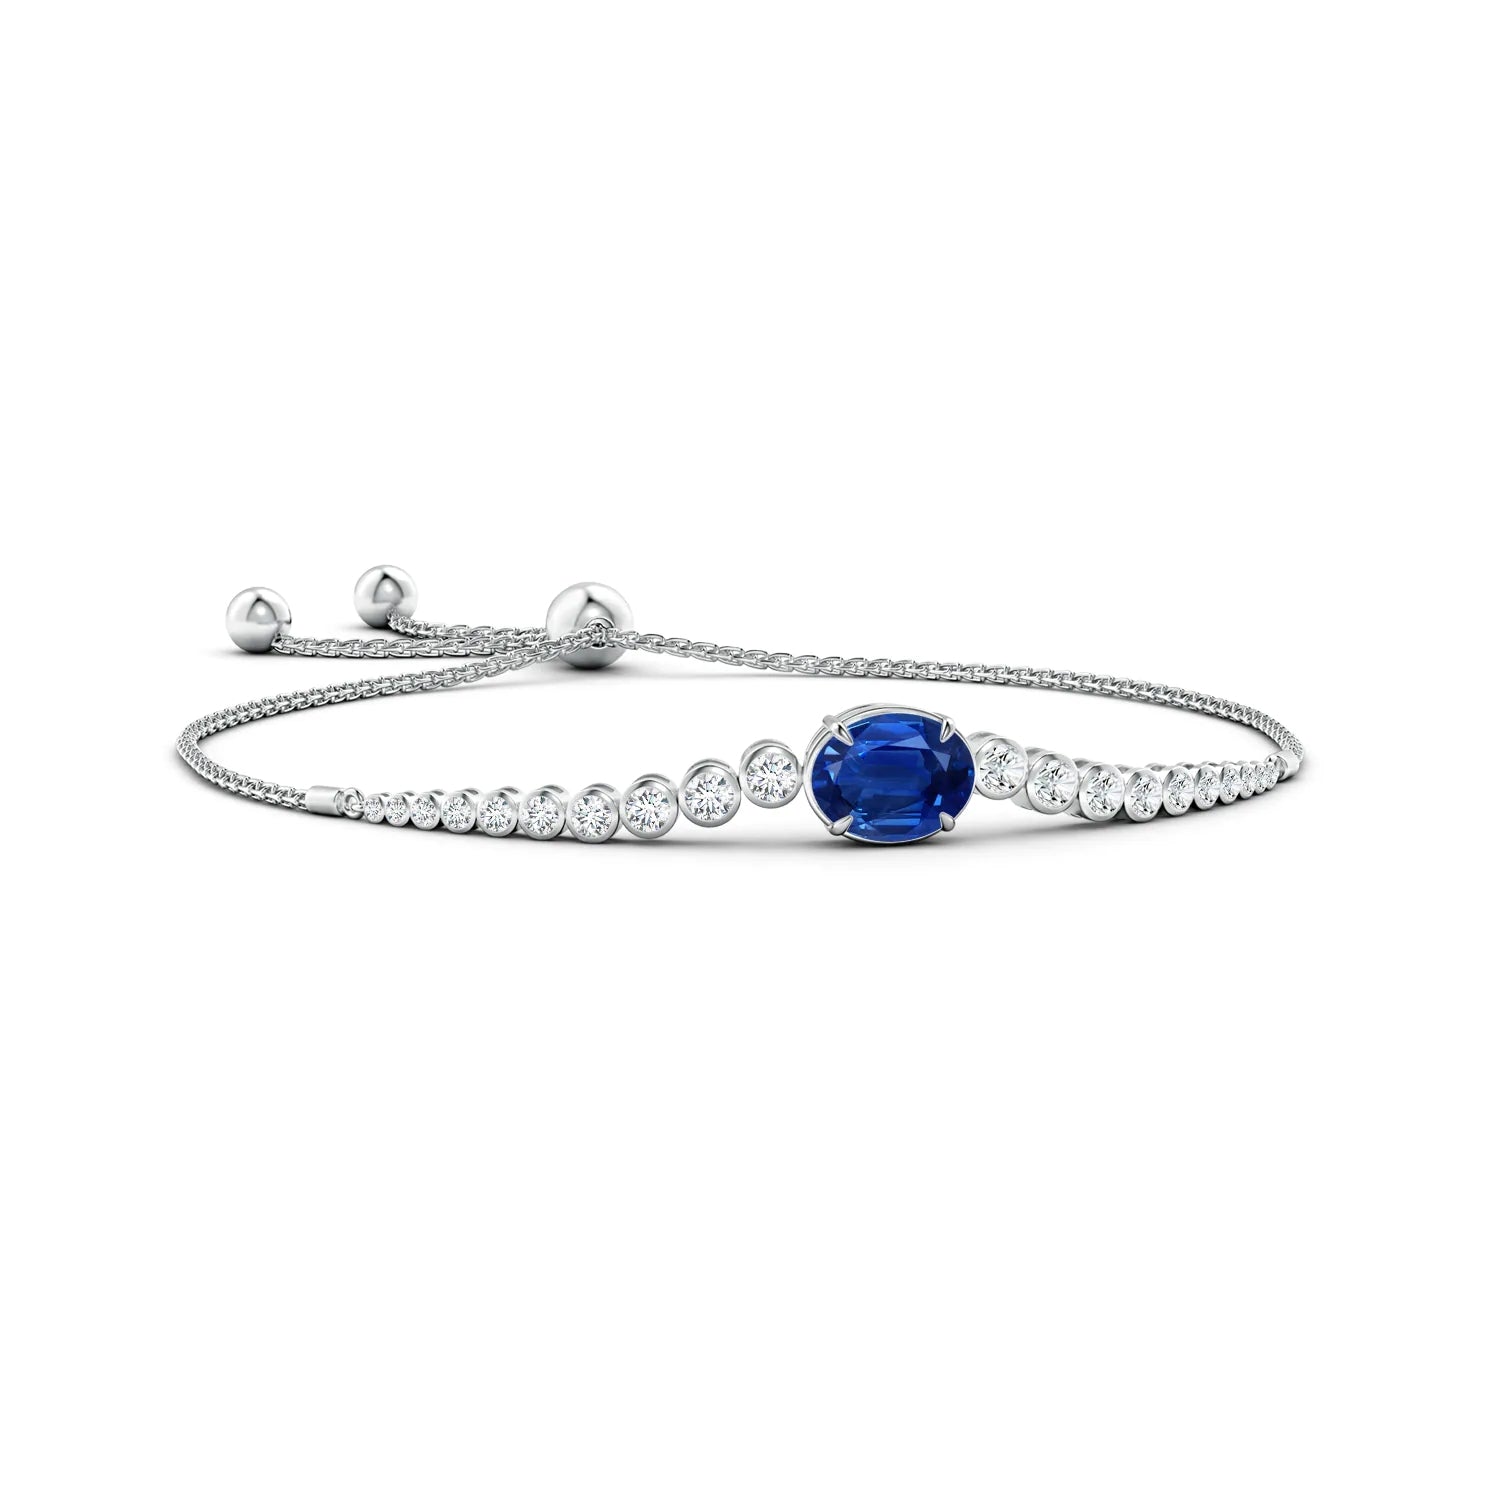 4.13 CT. Oval Blue Sapphire Bolo Bracelet with Bezel White Sapphire